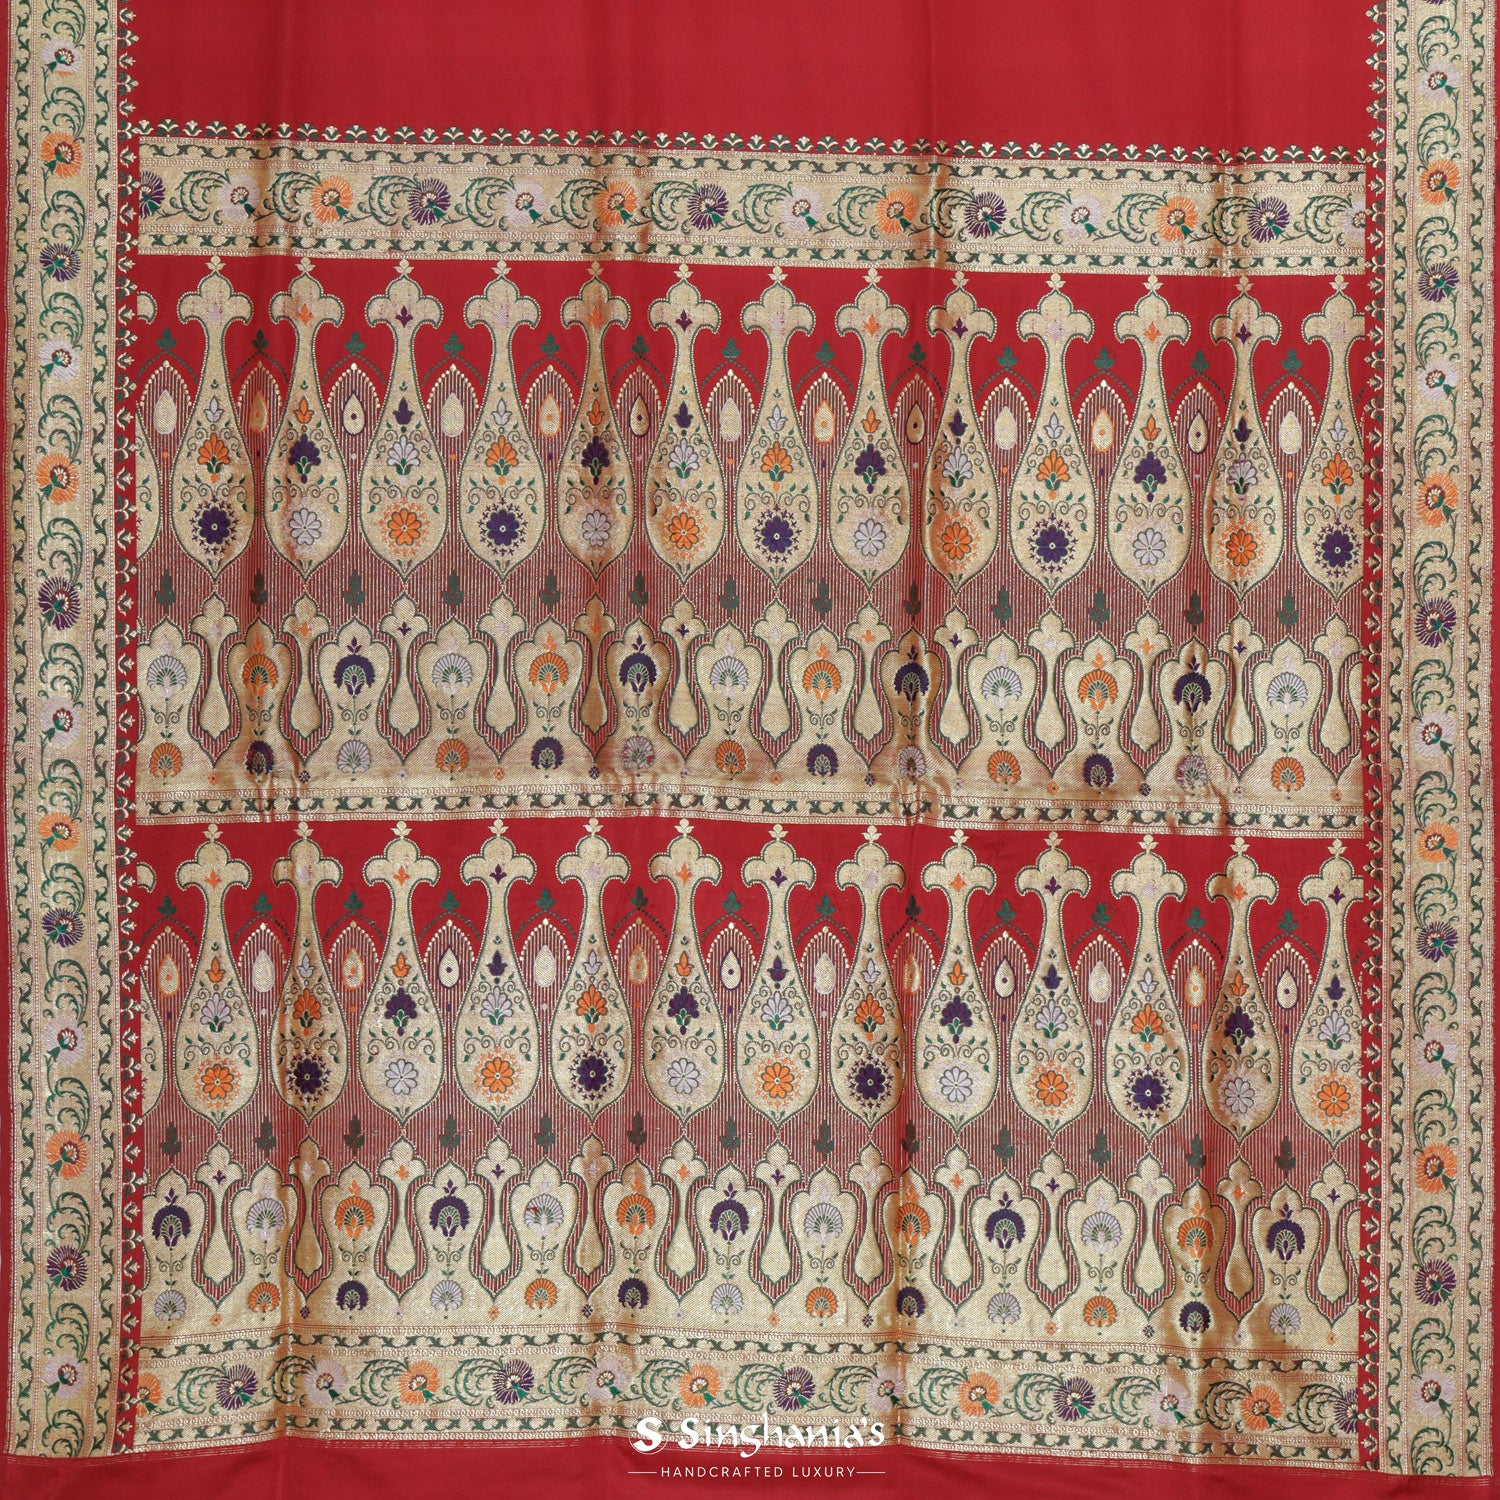 Hot Red Banarasi Silk Saree With Meenakari Weaving